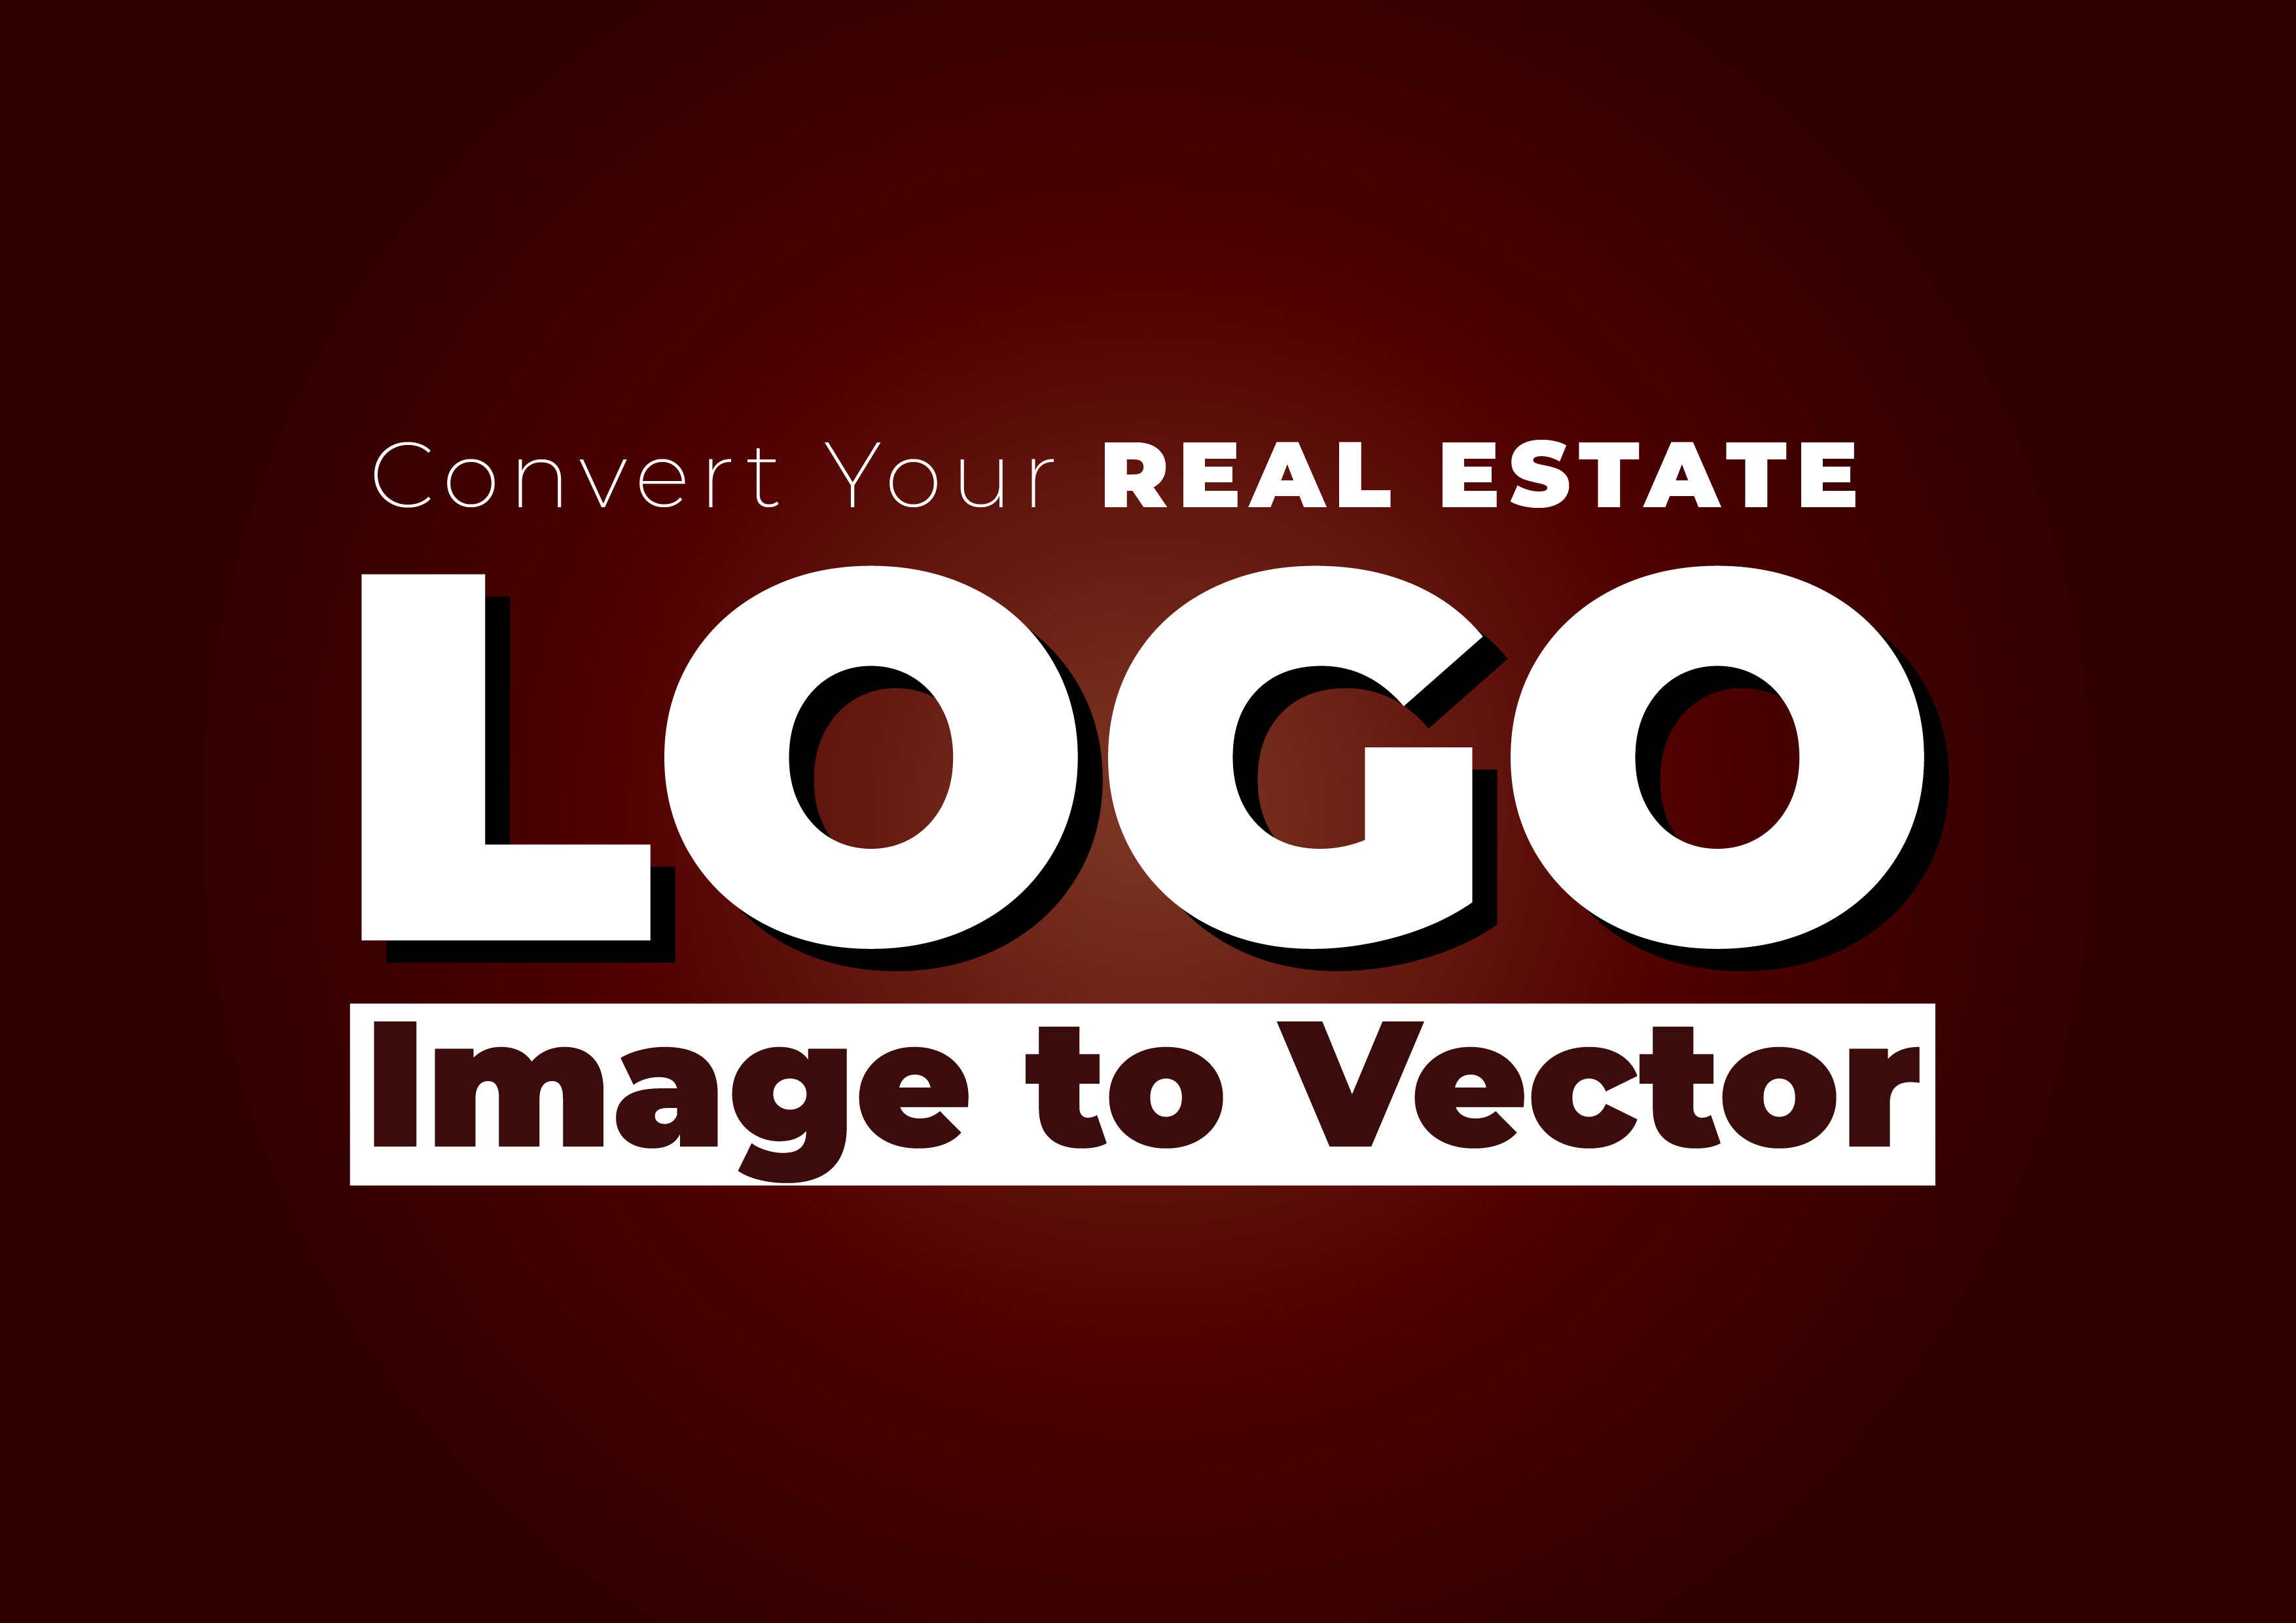 I will Convert real estate logo jpg to vector